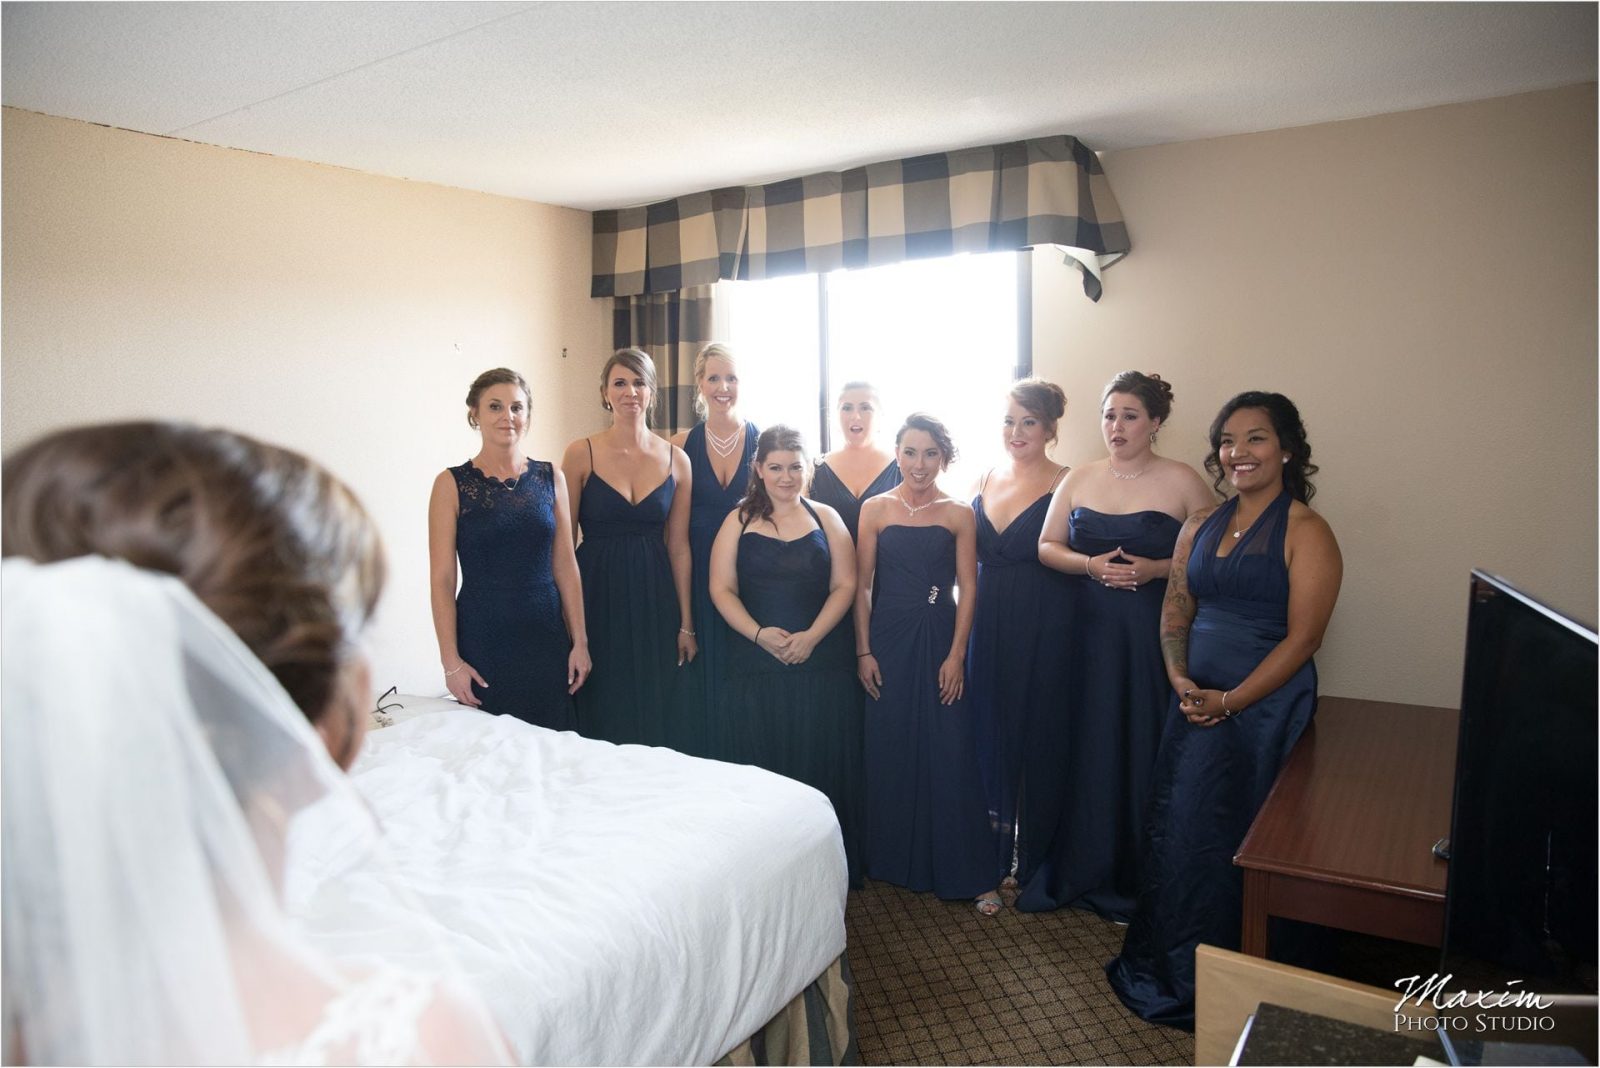 Pattison Park Lodge Wedding bridesmaids reveal